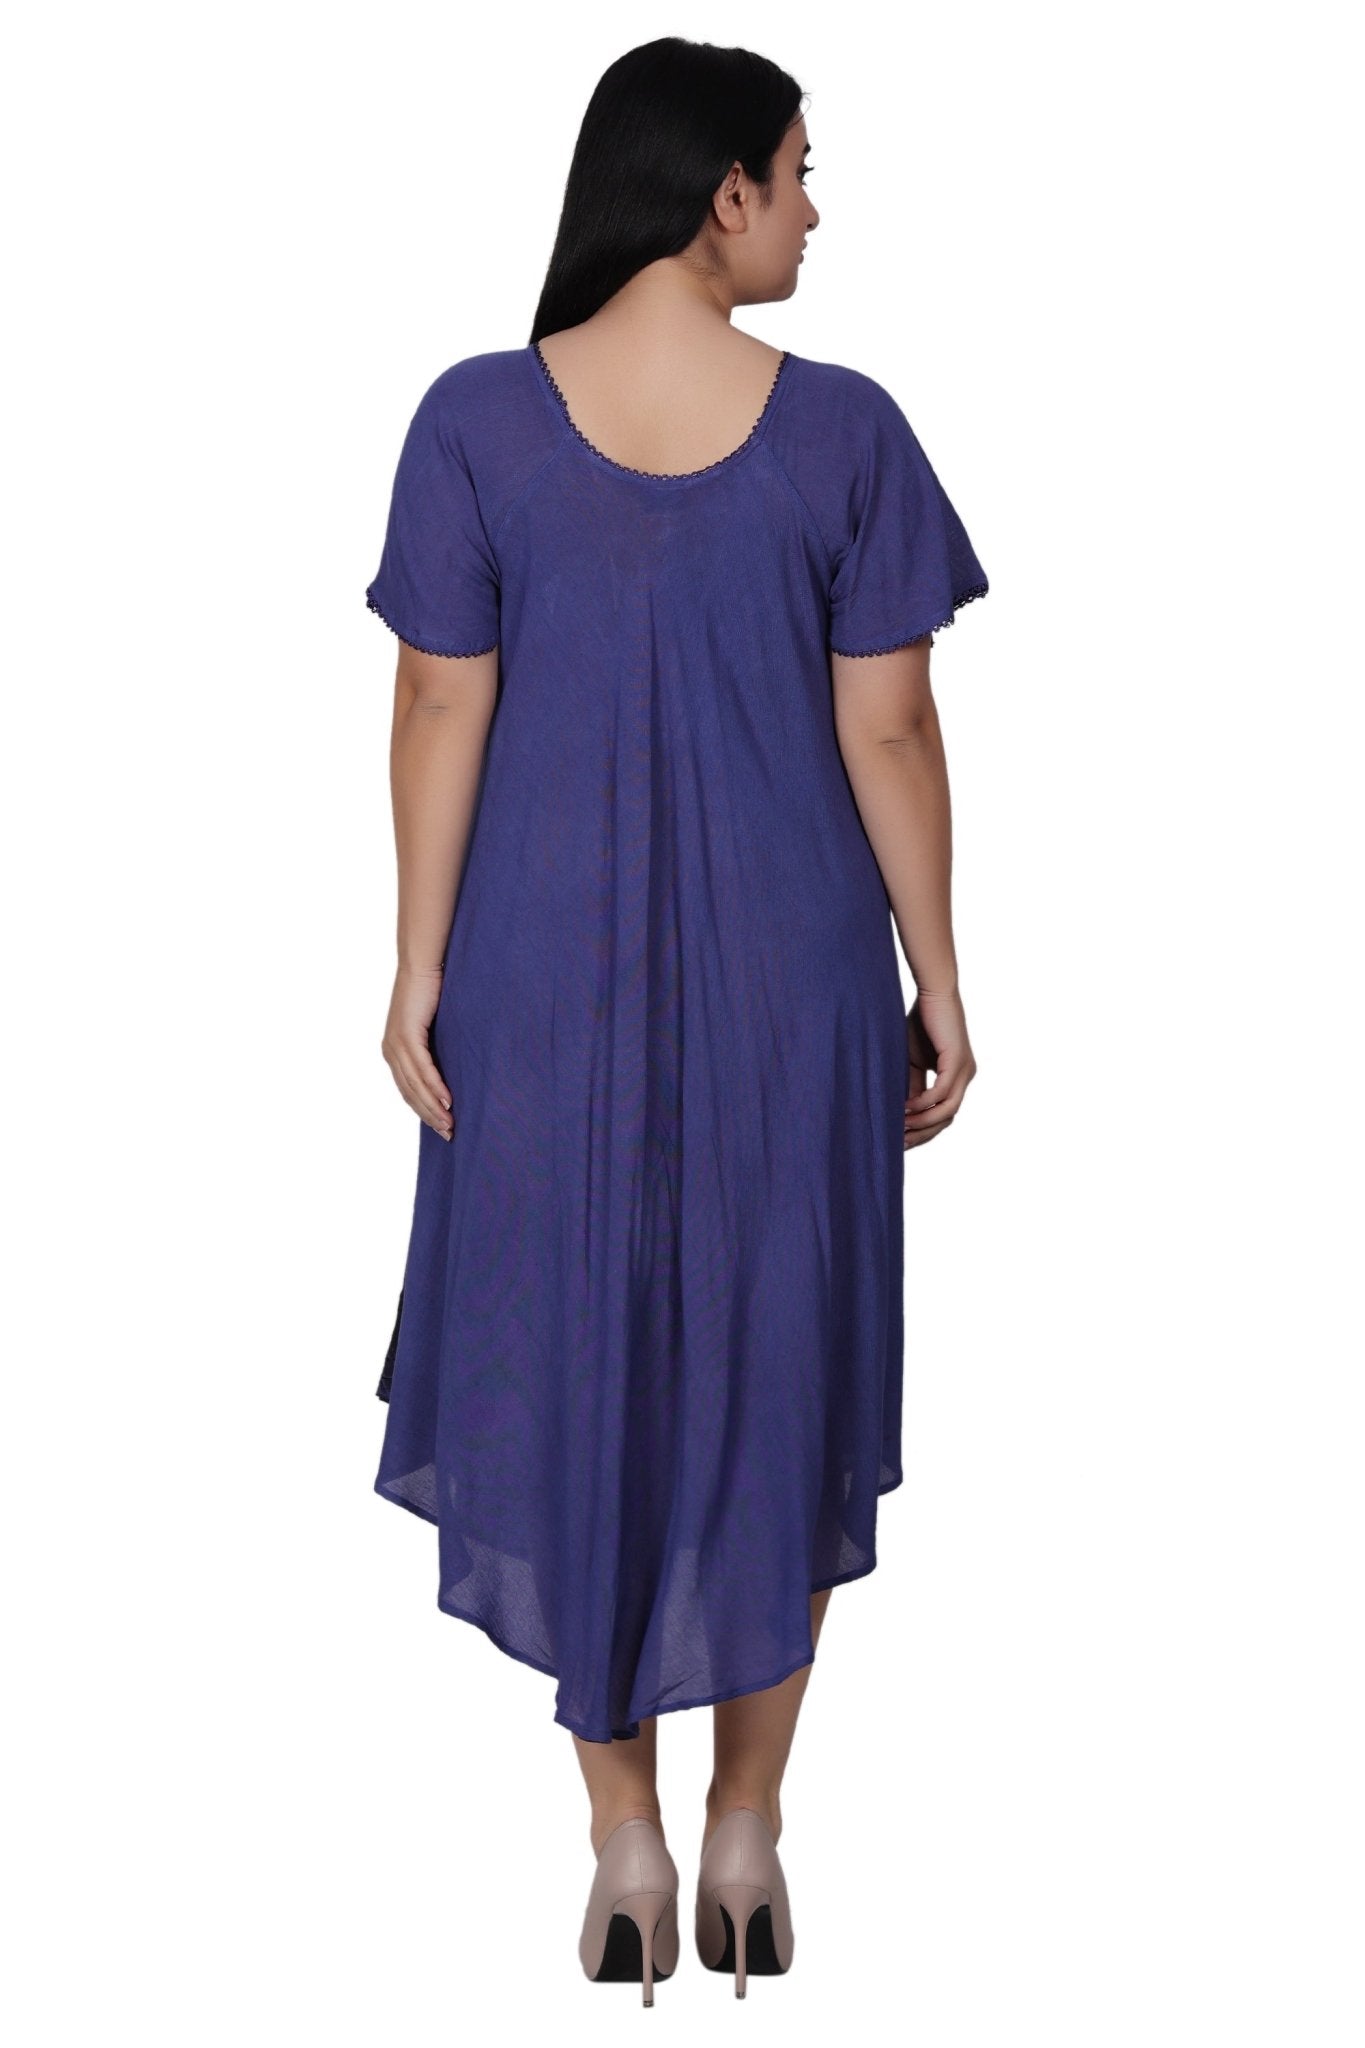 Wavy Tie Dye Dress 482164-SLVD - Advance Apparels Inc